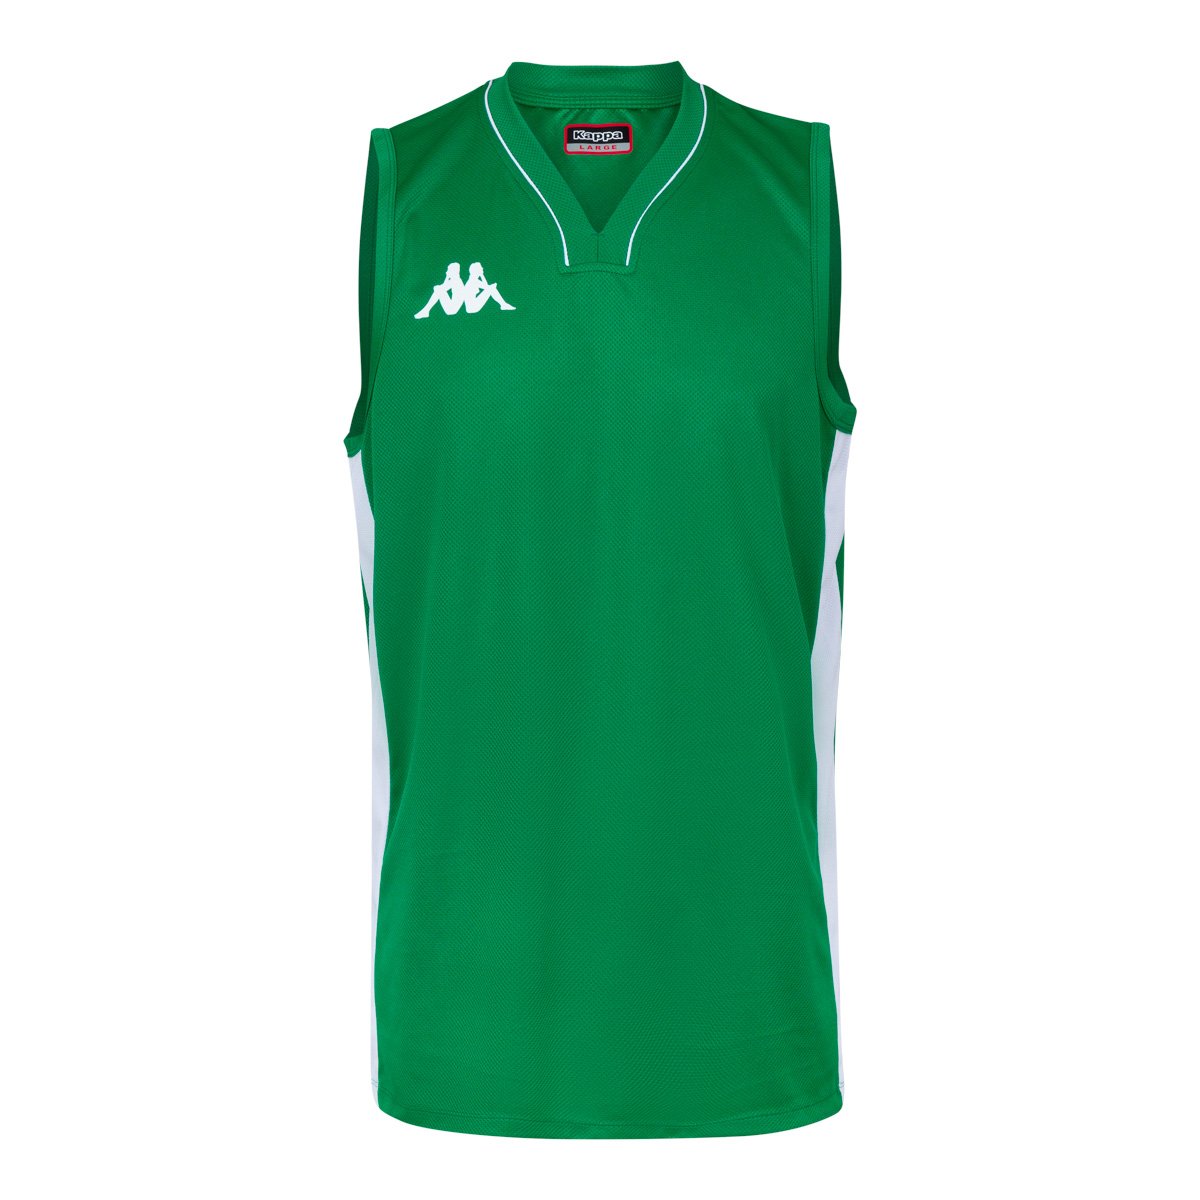 Camiseta de juego Basket Cairo Verde Hombre - Imagen 1